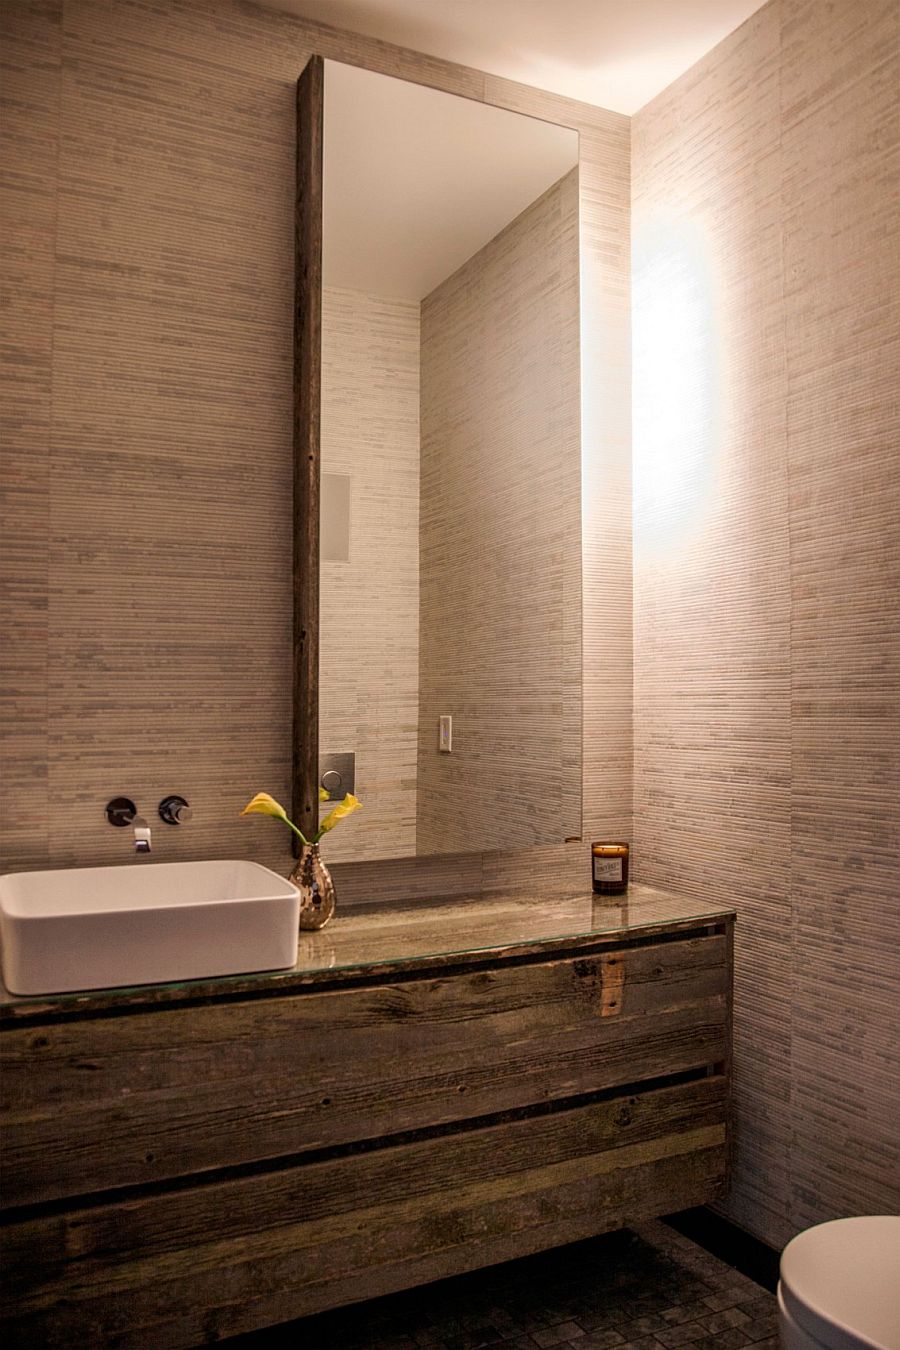 Reclaimed wooden bathroom vanity with glass top